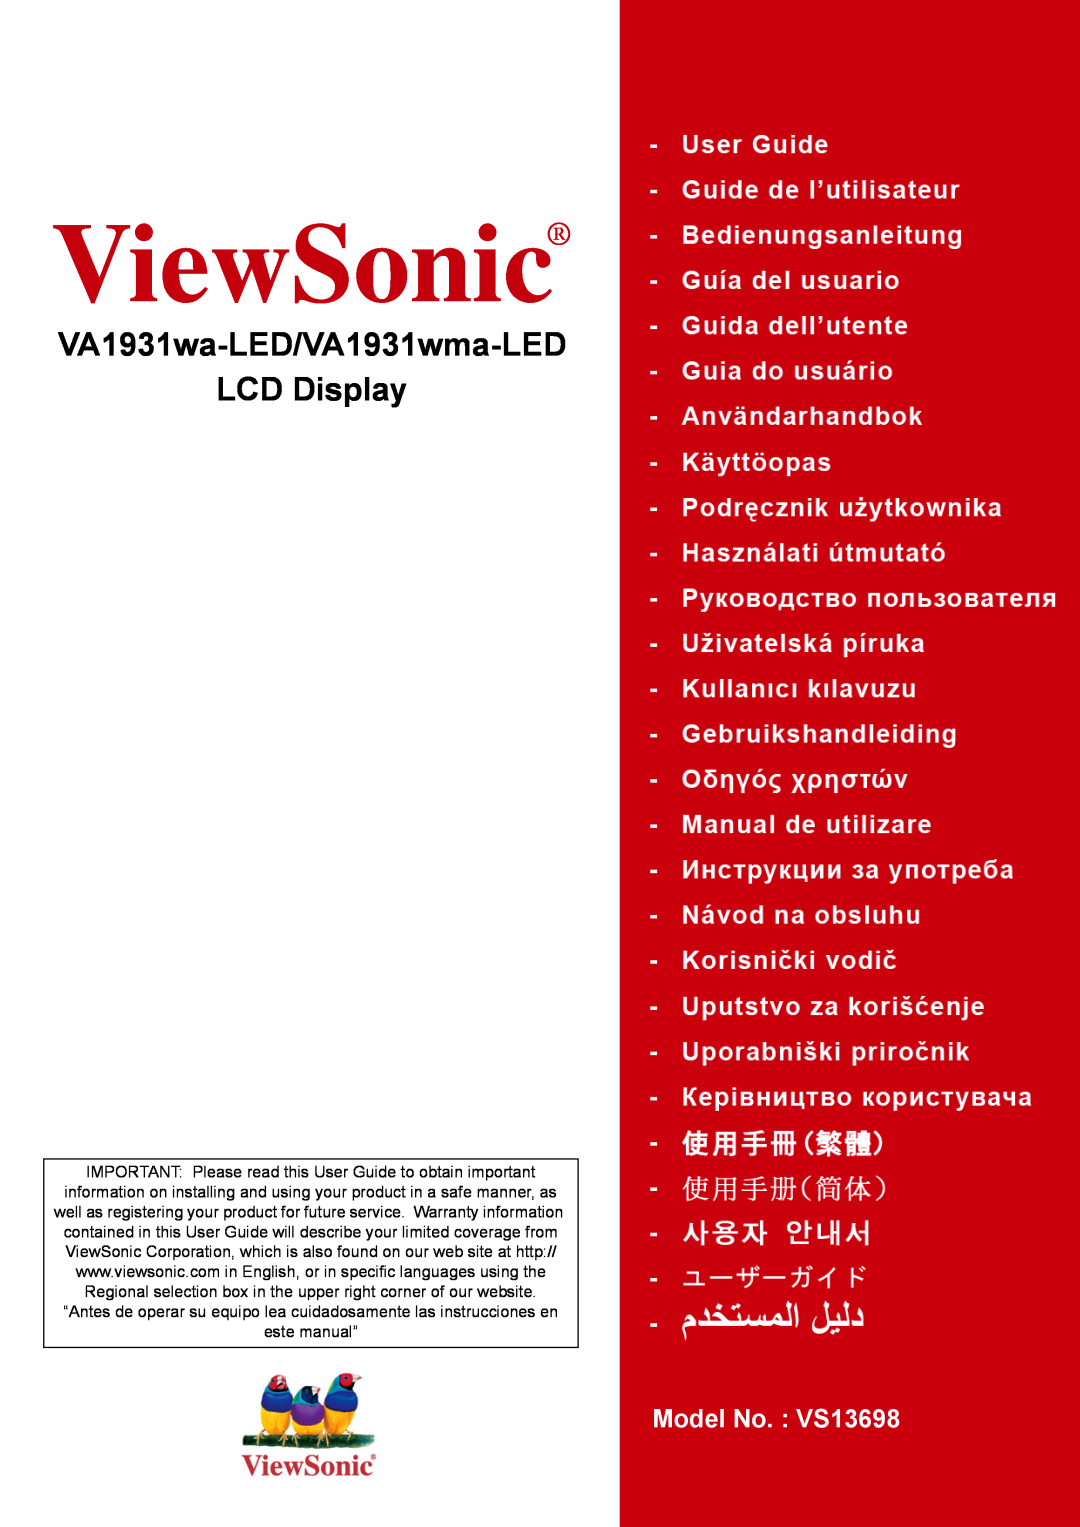 ViewSonic VA1931WMA-LED warranty VA1931wa-LED/VA1931wma-LED LCD Display, ViewSonic, Model No. VS13698 